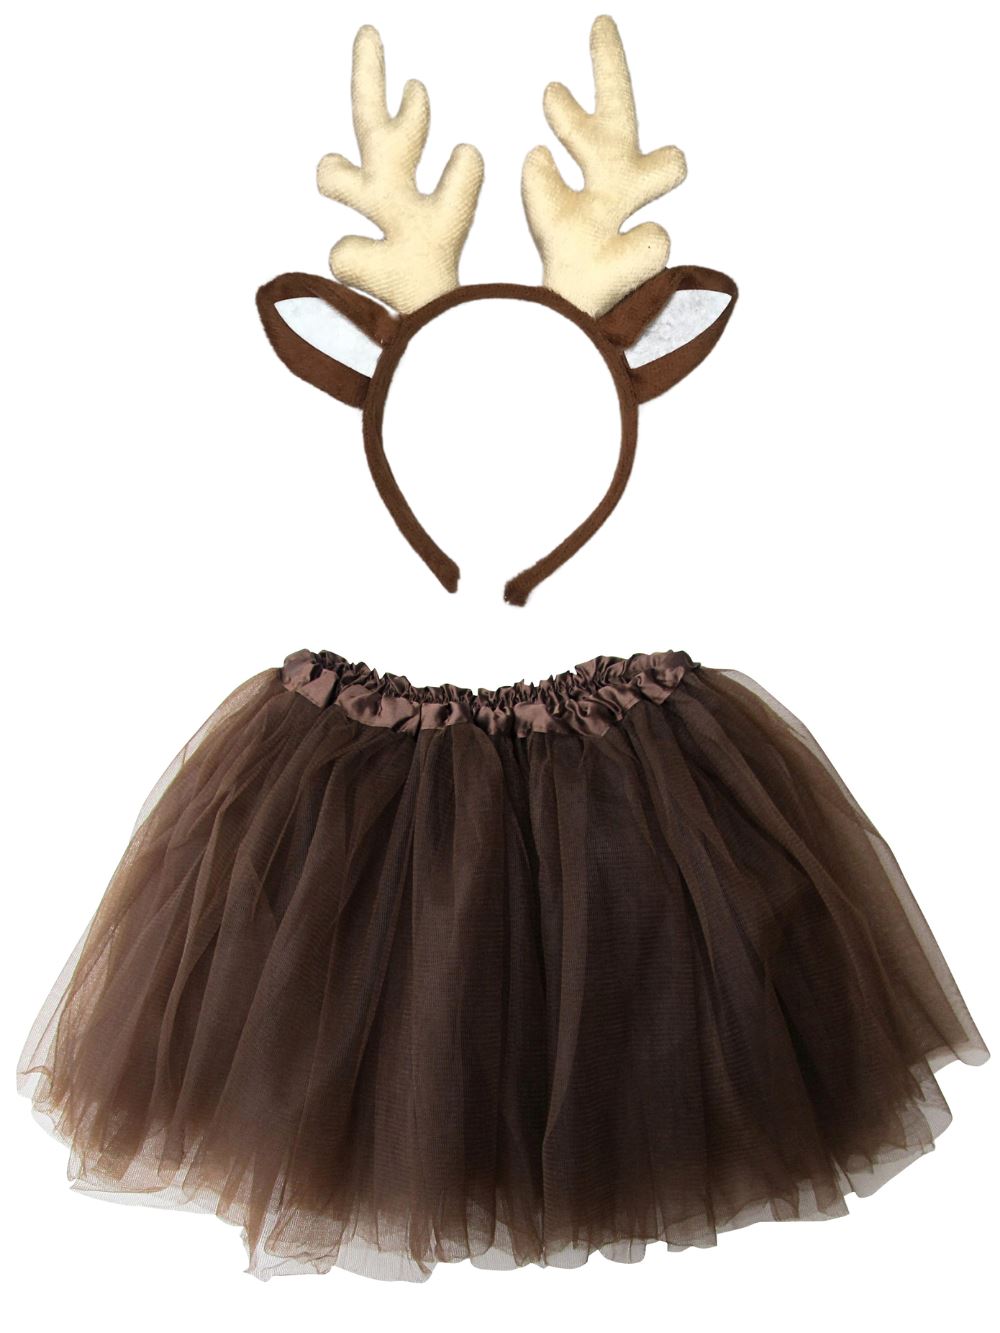 Deer or Reindeer Costume - Complete Kids Costume Set with Tutu and Antler Headband - Sydney So Sweet